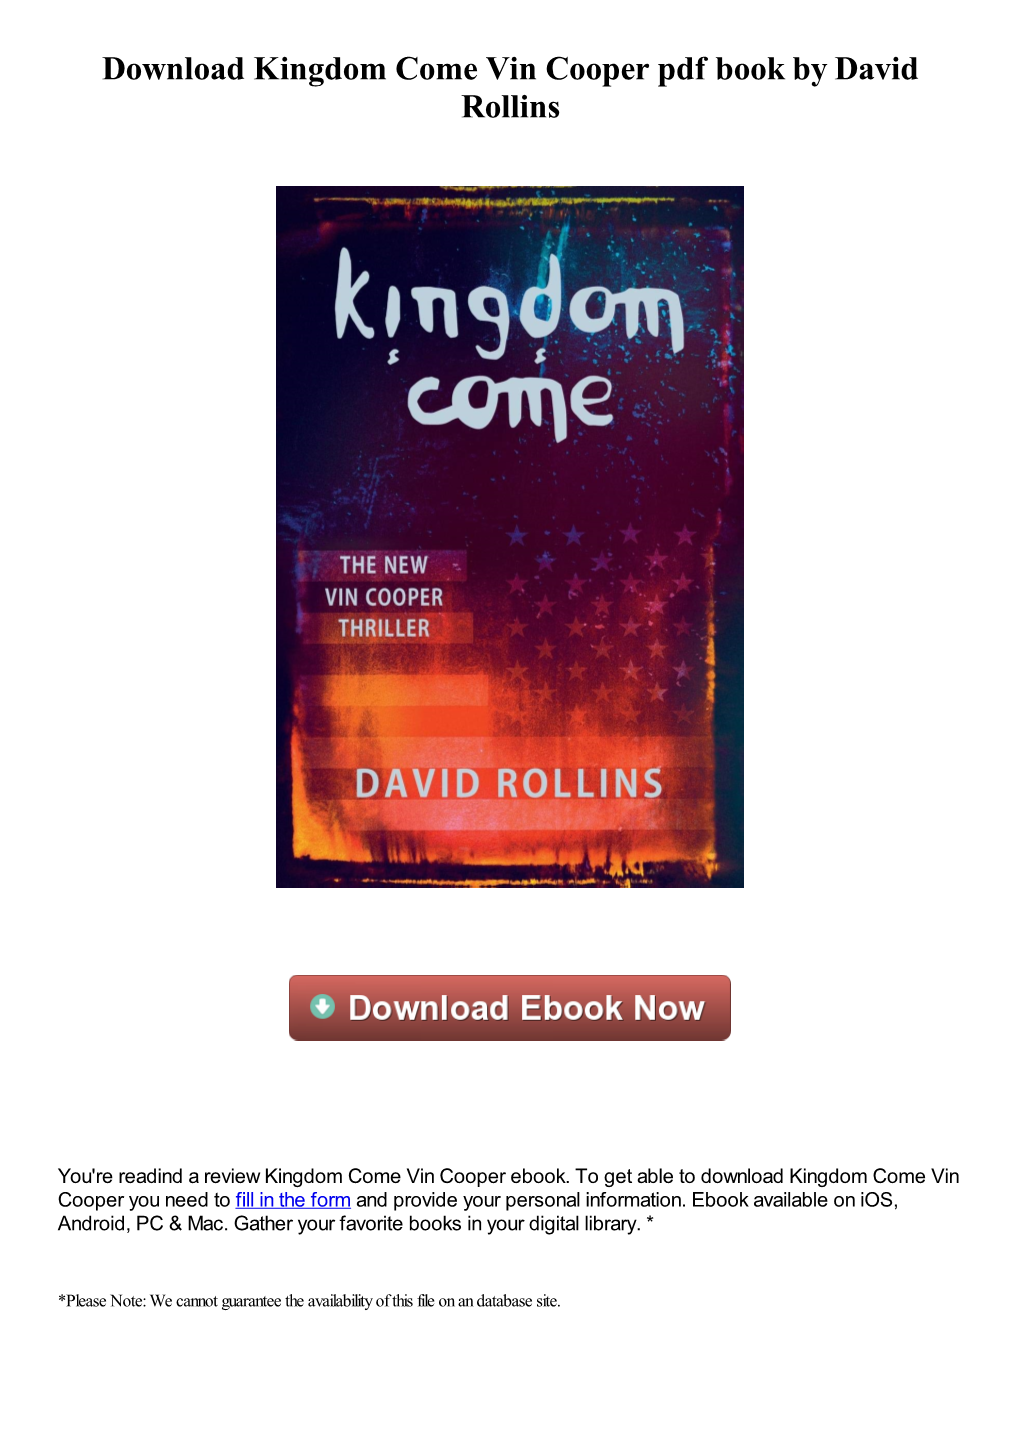 Download Kingdom Come Vin Cooper Pdf Ebook by David Rollins